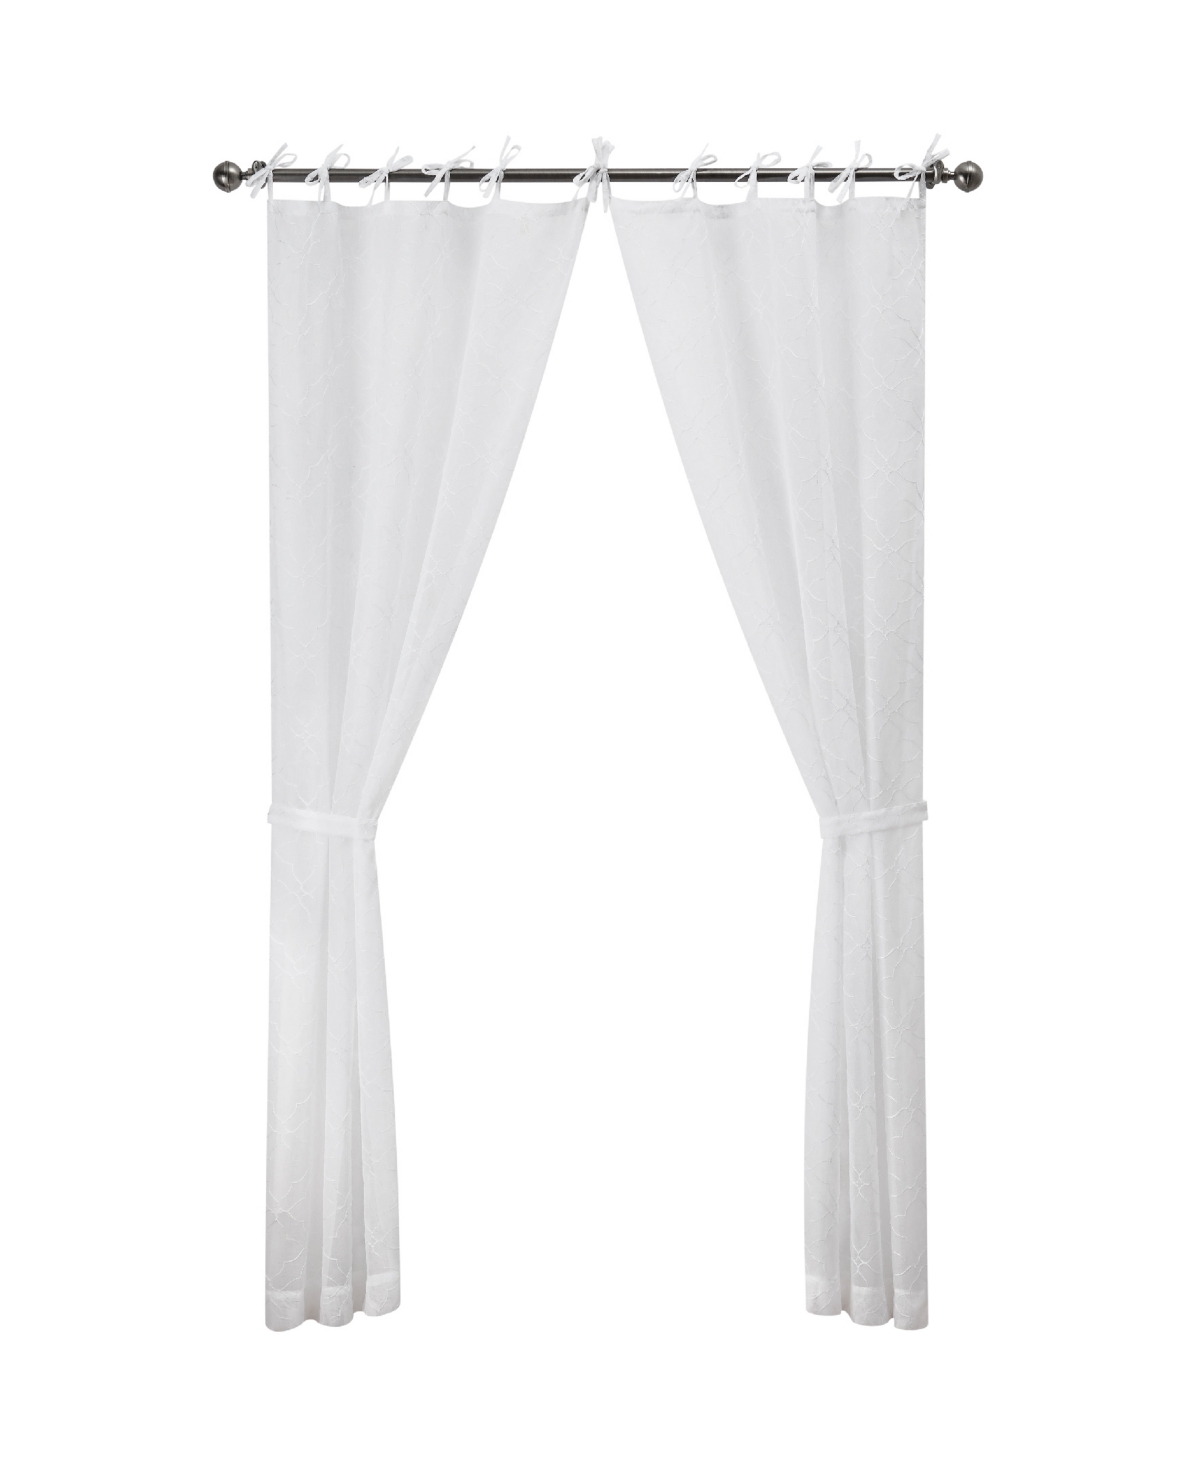 Nora Embroidery Sheer Tie Top Window Curtain Panel Pair with Tiebacks, 38" x 84" - White